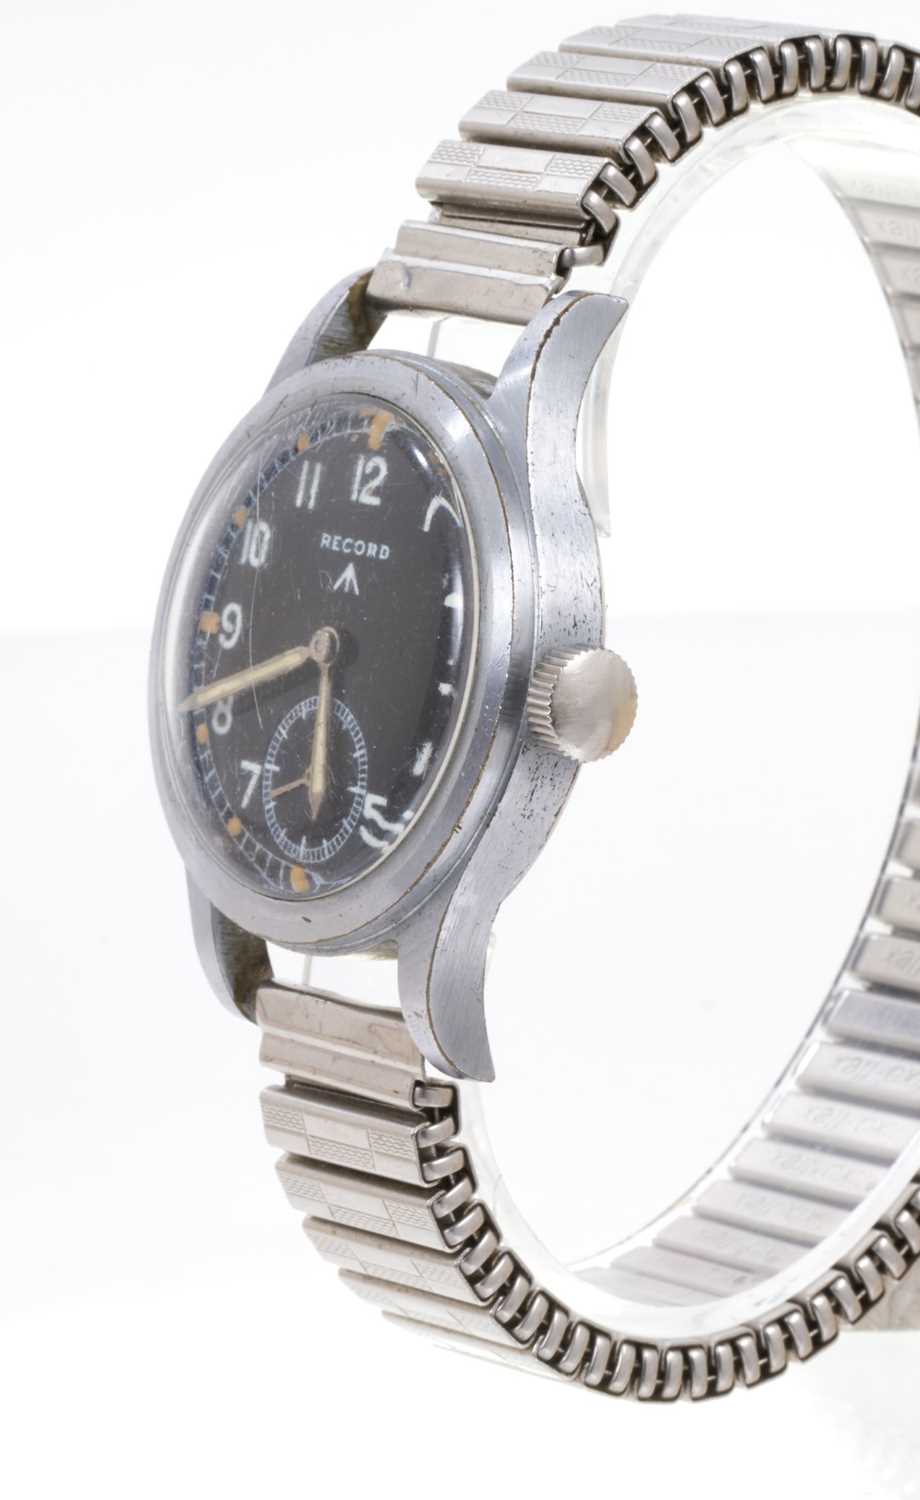 Second World War Record ‘Dirty Dozen’ military wristwatch - Image 3 of 4